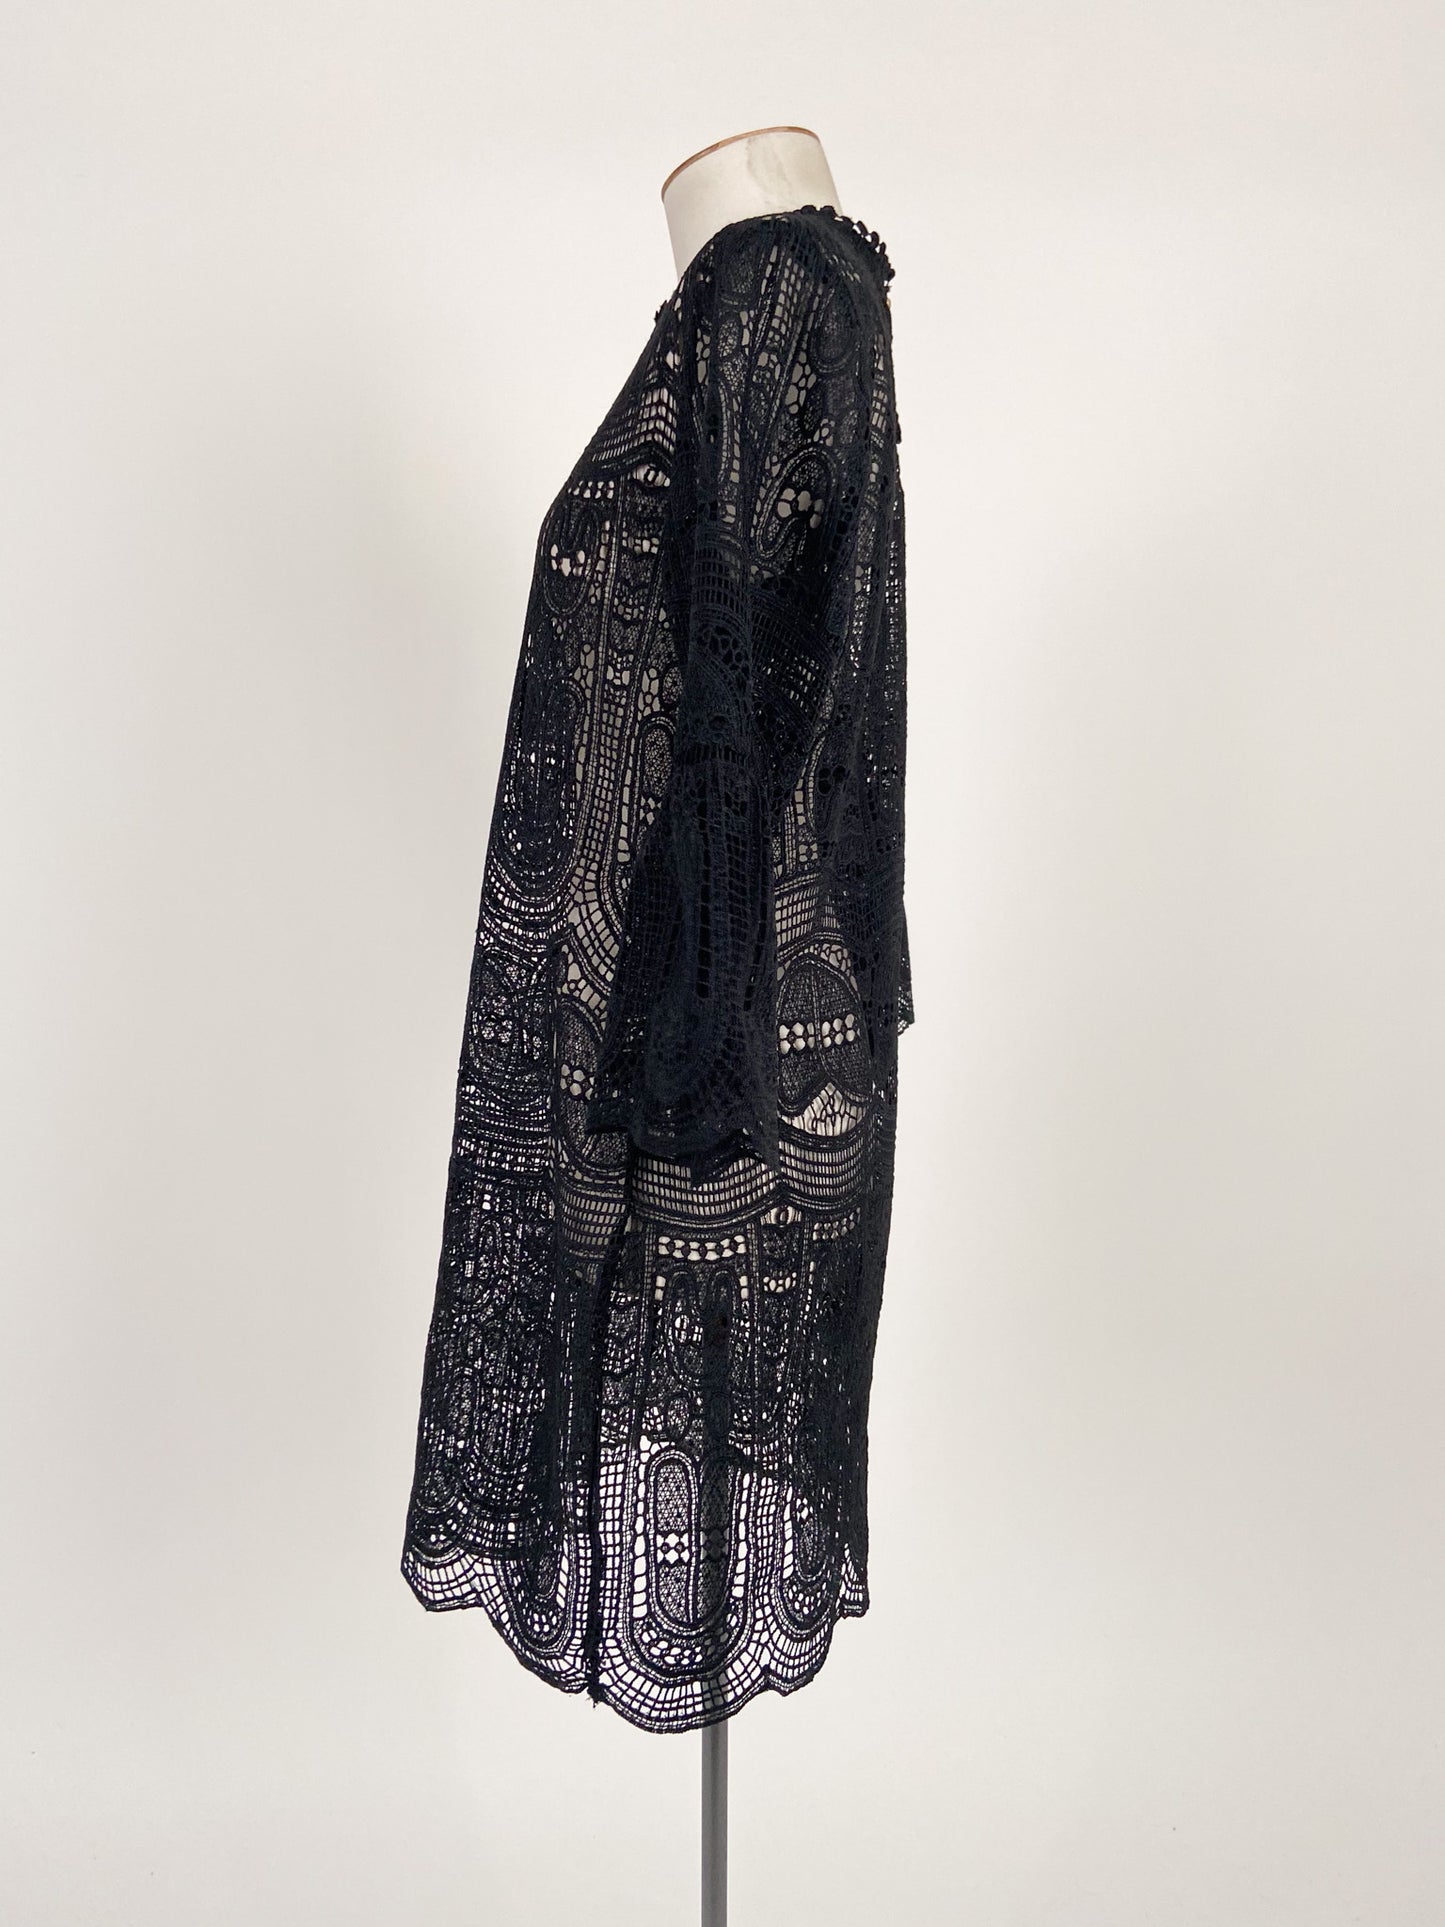 Caroline Morgan | Black Formal/Workwear Dress | Size 10